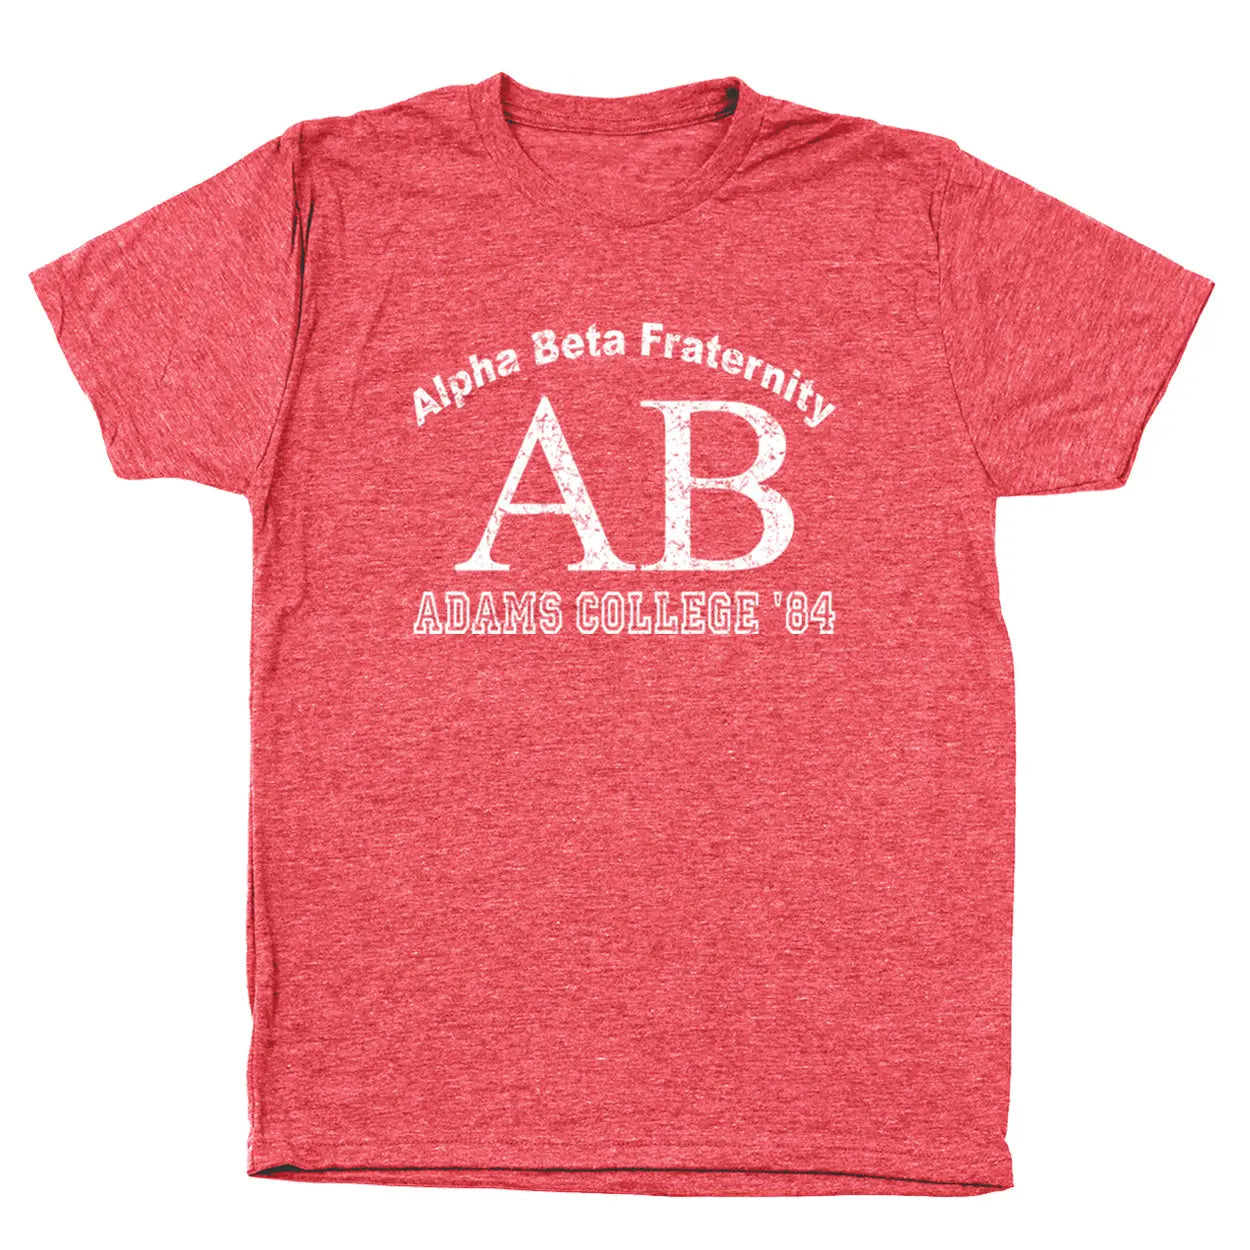 Alpha Beta Adams Atoms College Tshirt - Donkey Tees